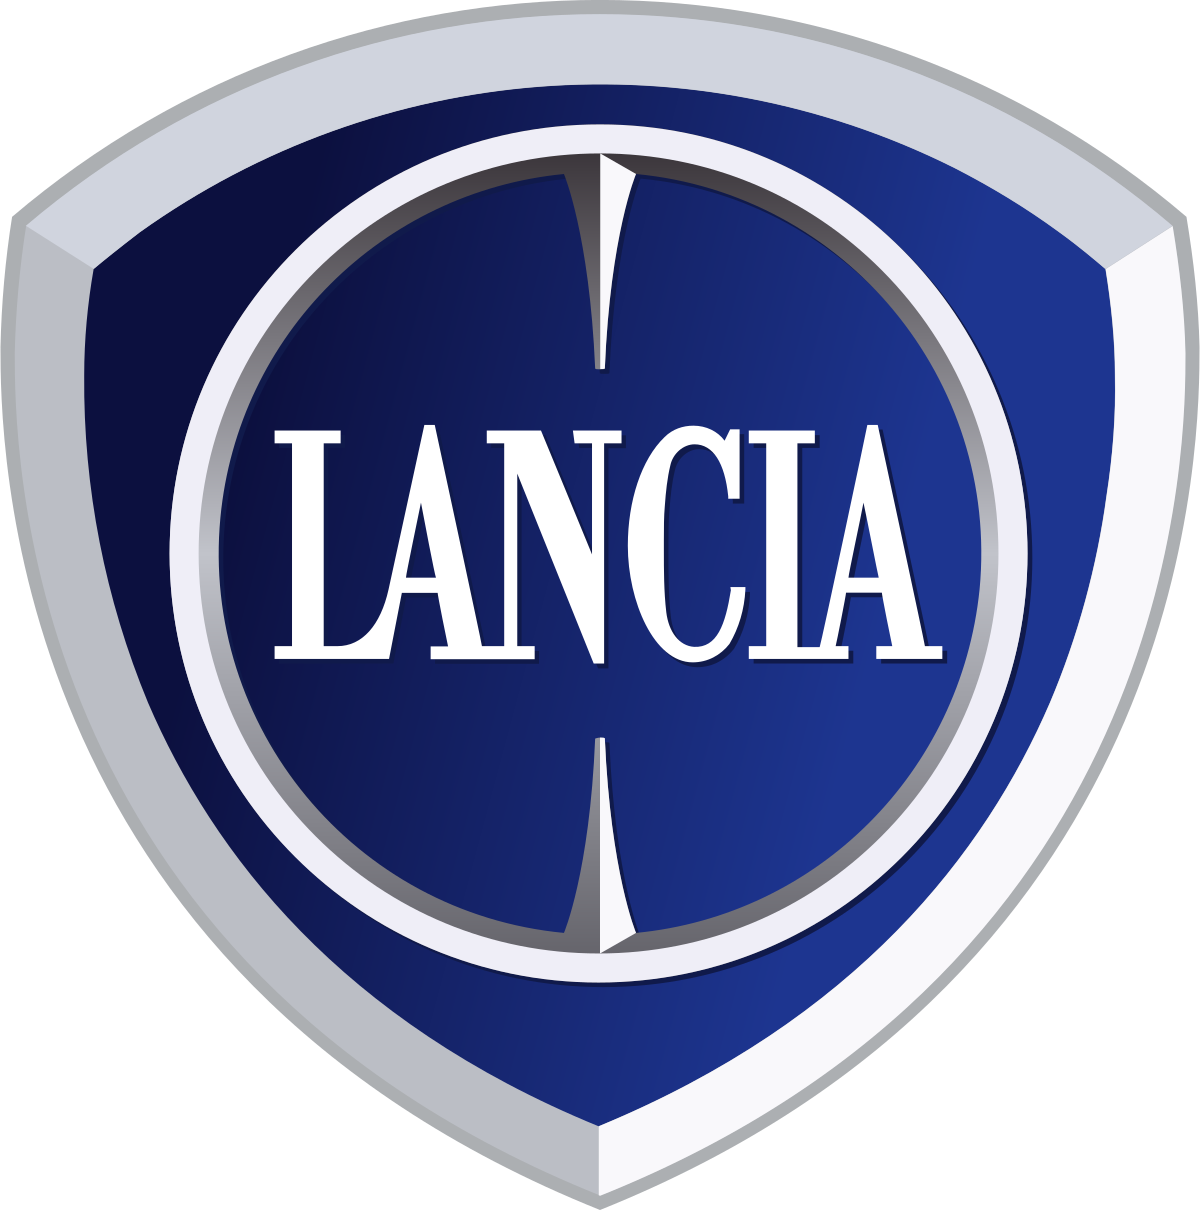 Logo_della_Lancia.svg